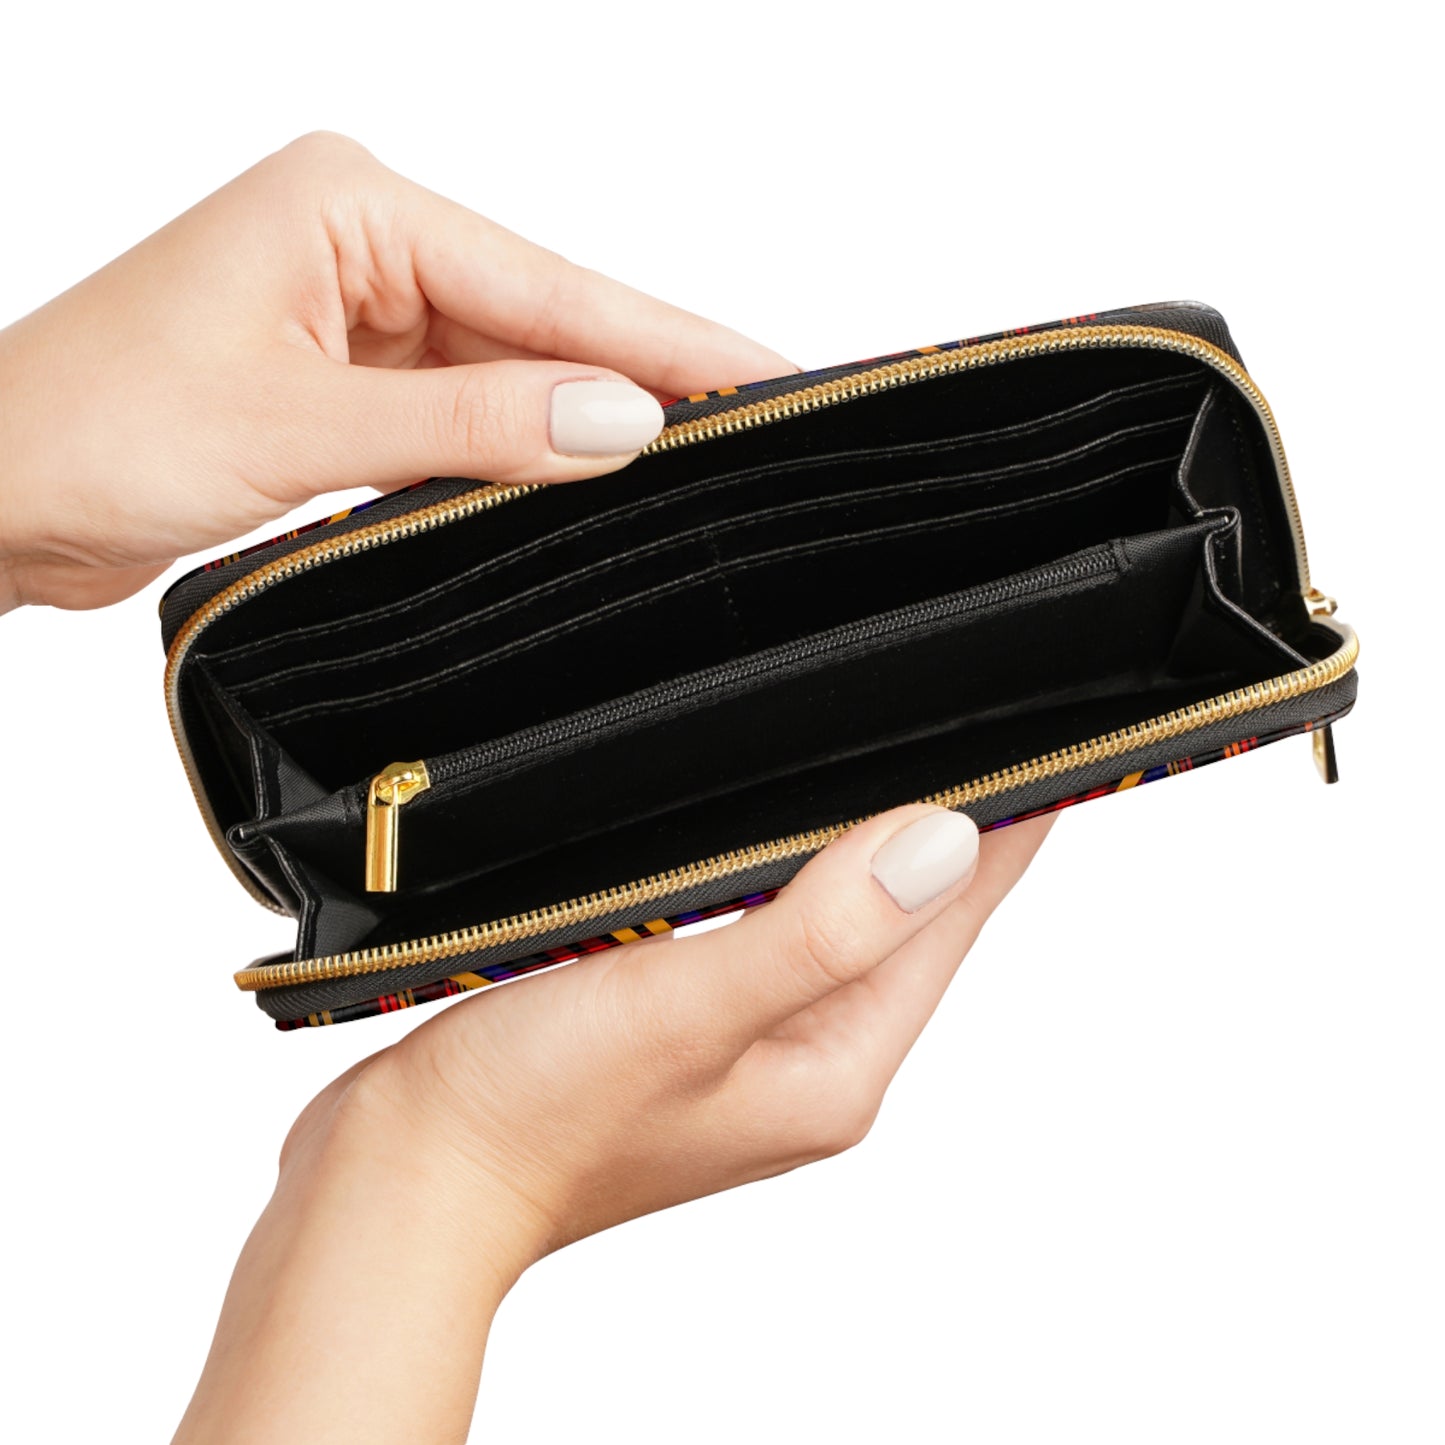 Hyperjet PLAID zipper Wallet